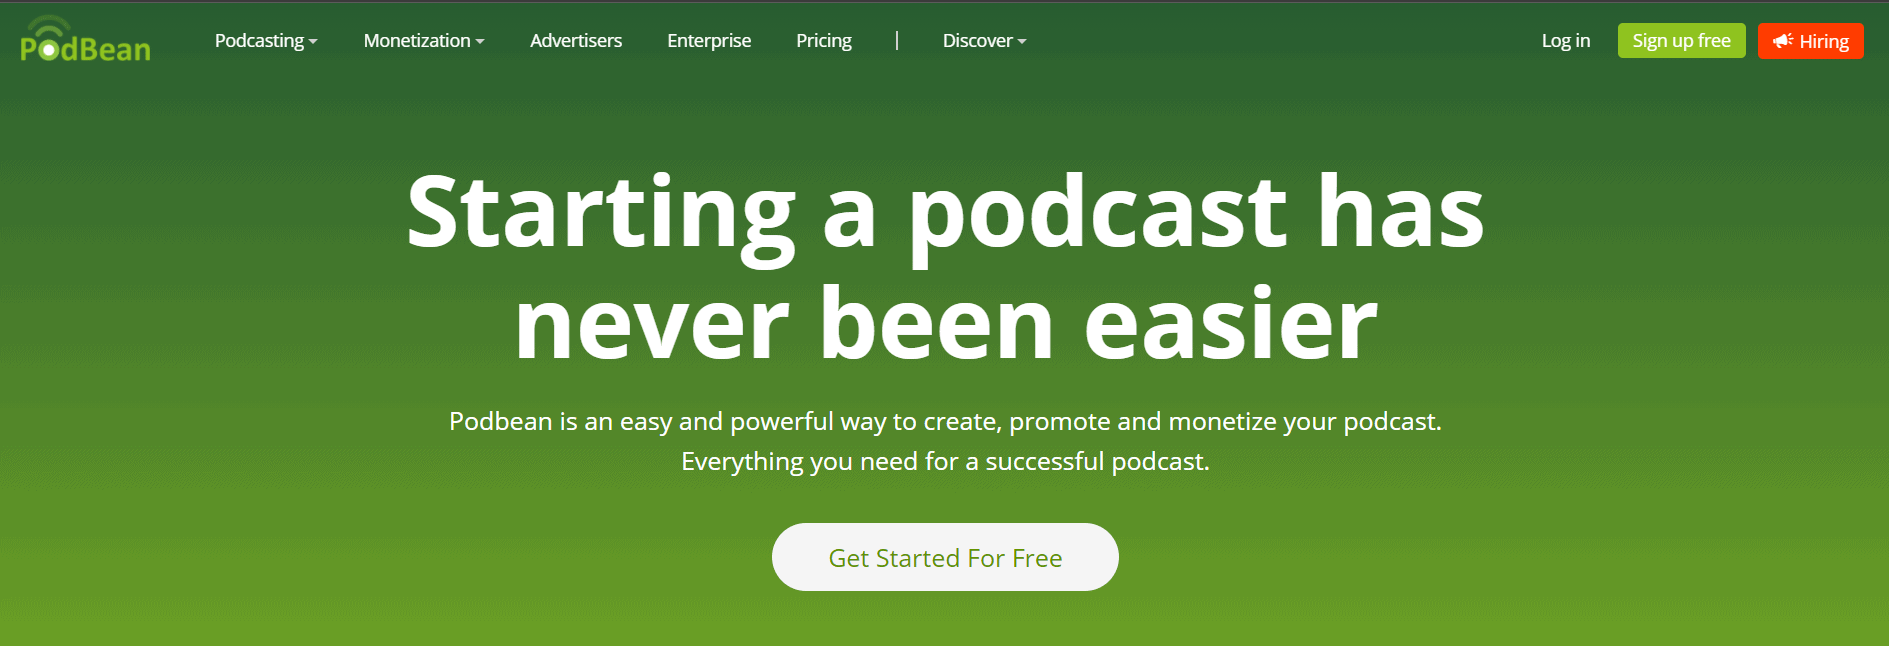 Podcast distribution software - Podbean